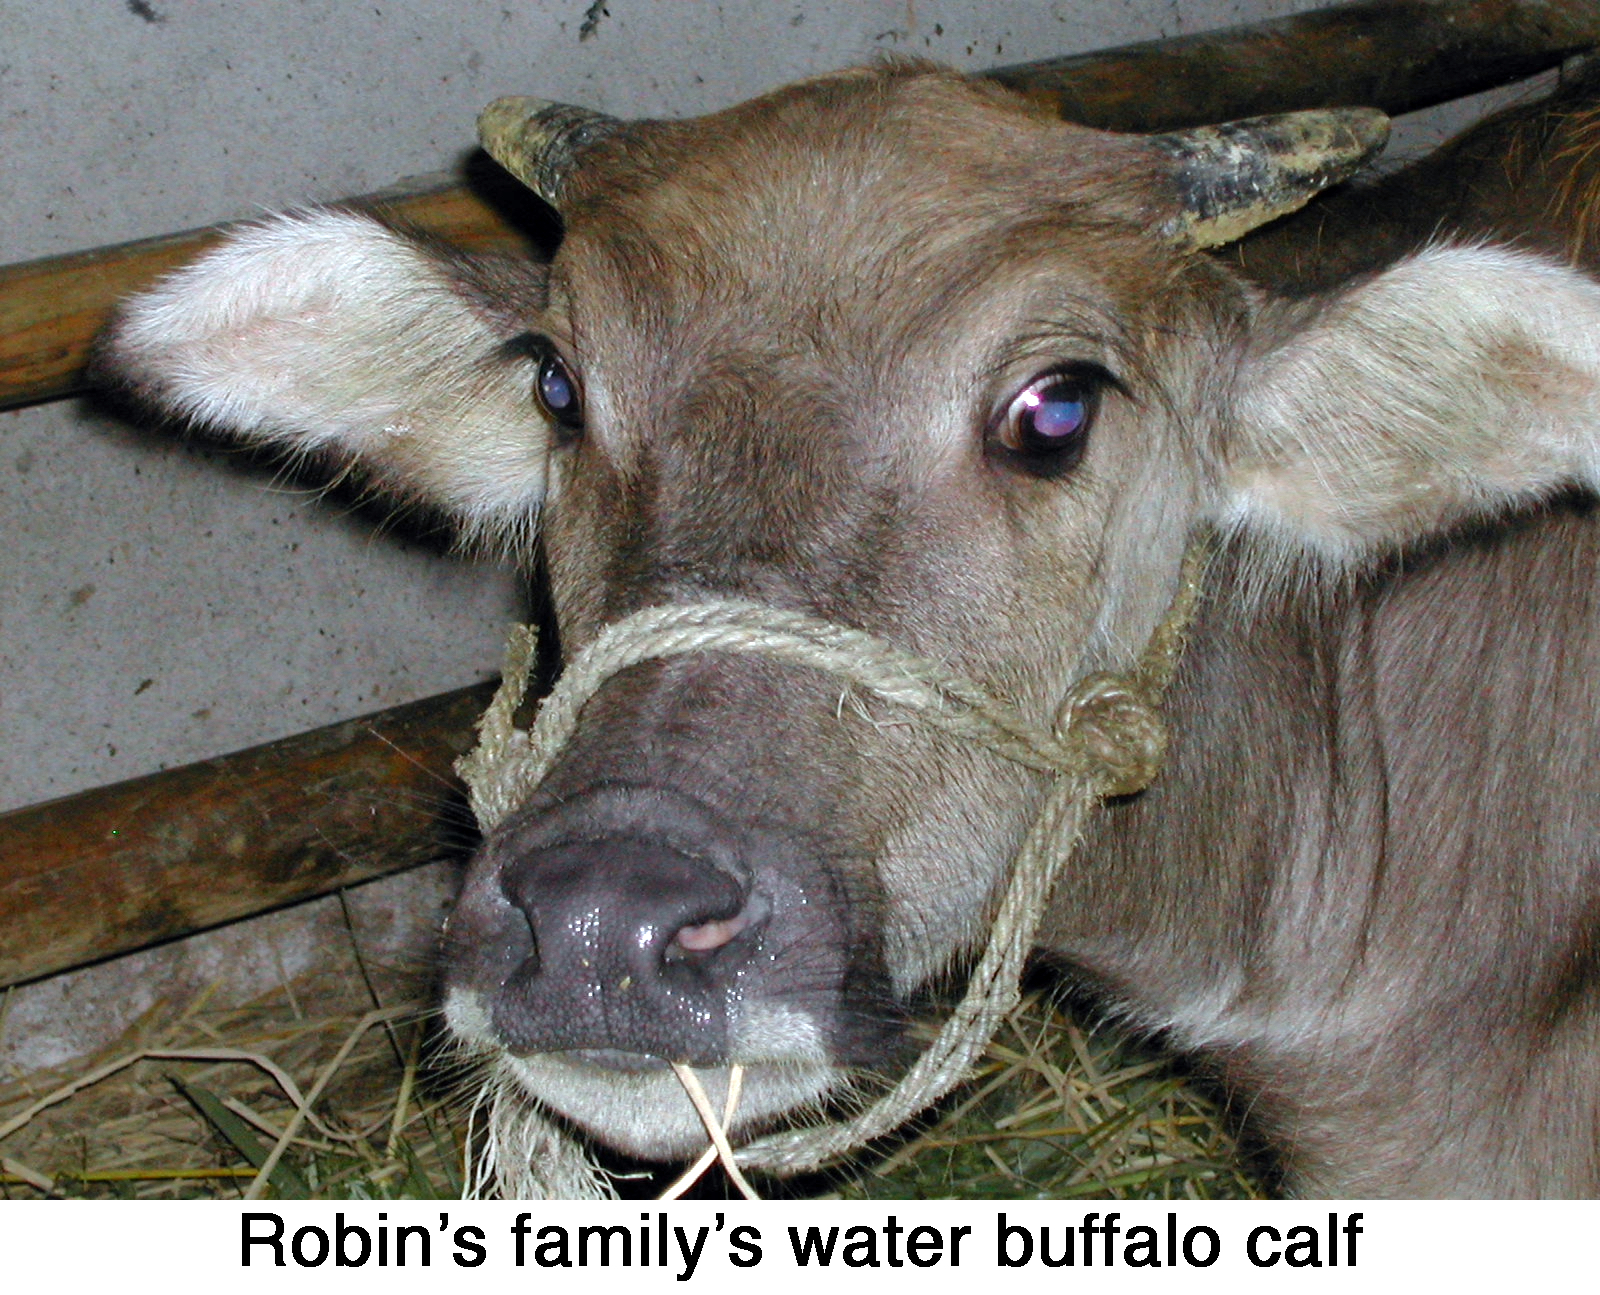 The face of the water buffalo calf